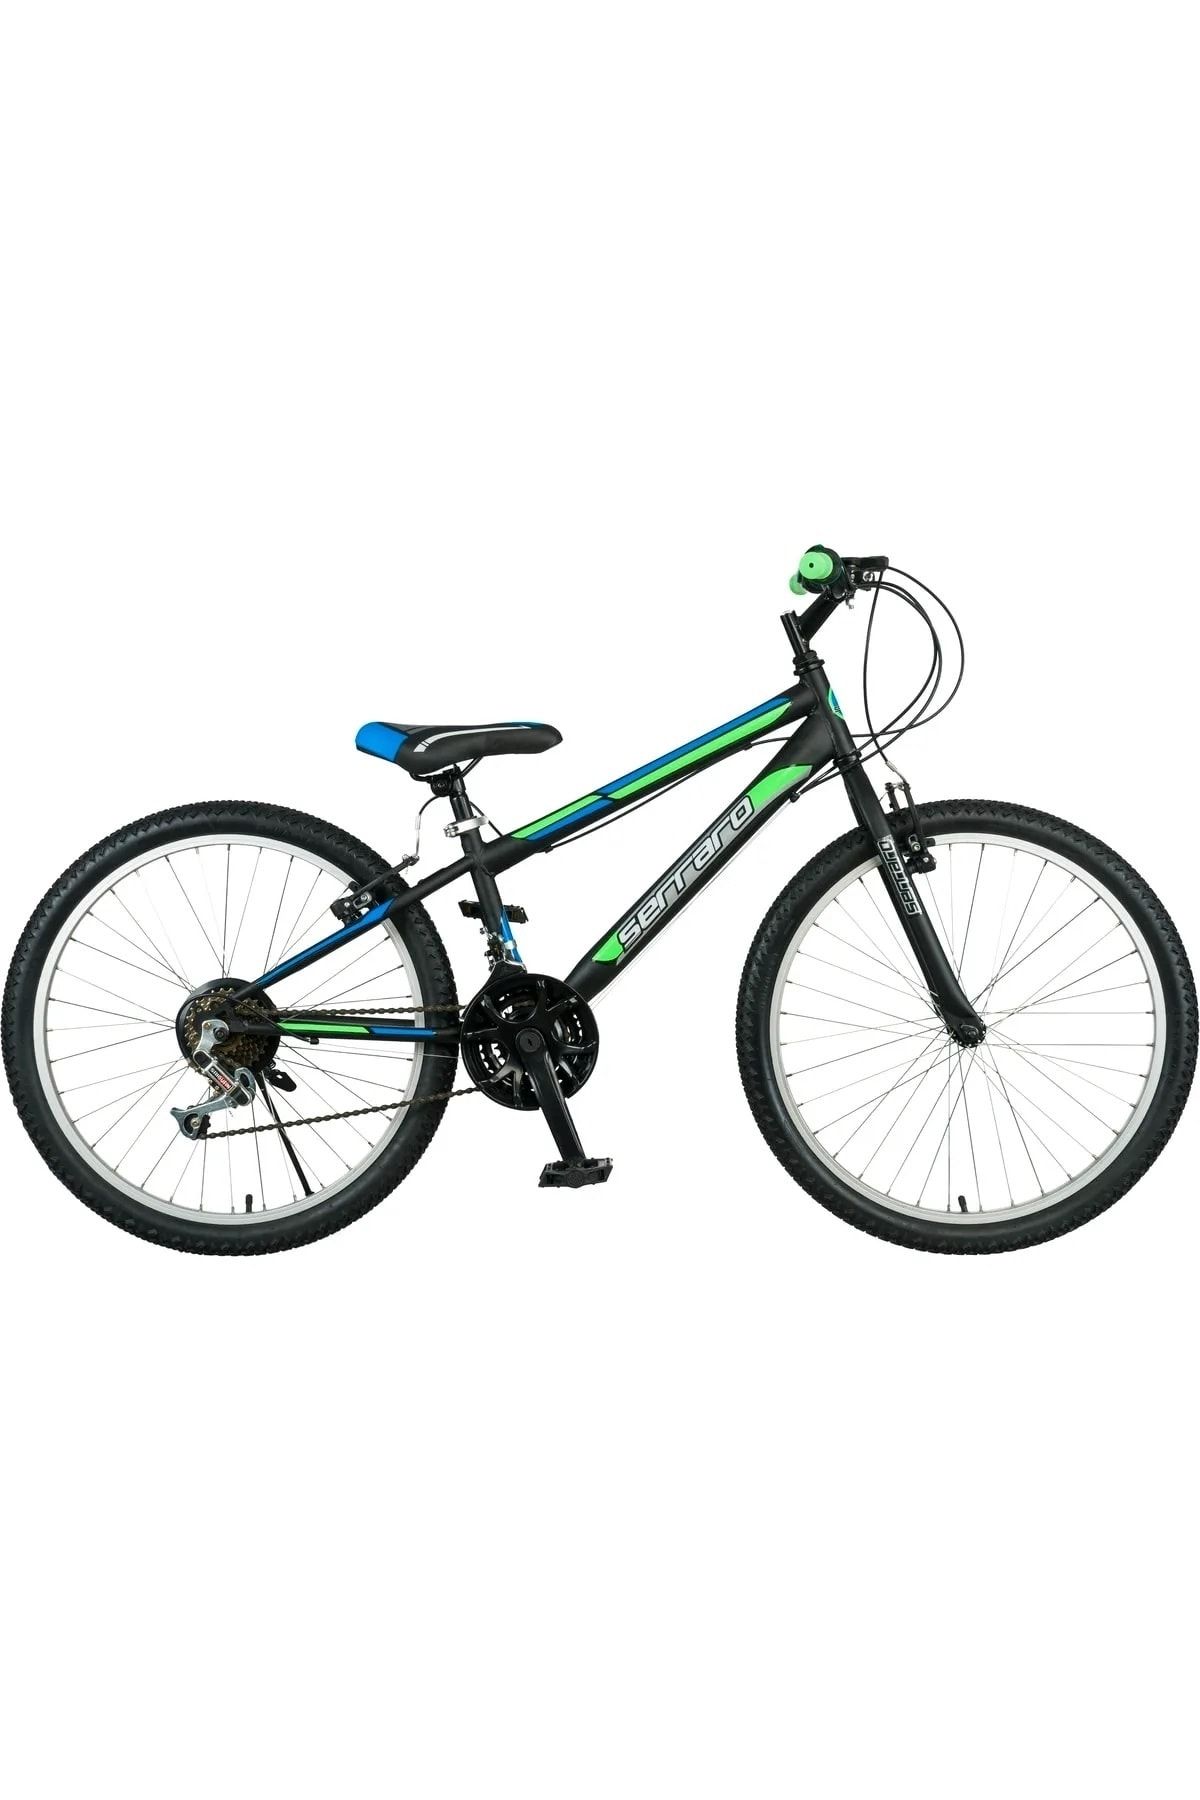 Serraro N203 New 24 Jant Bisiklet